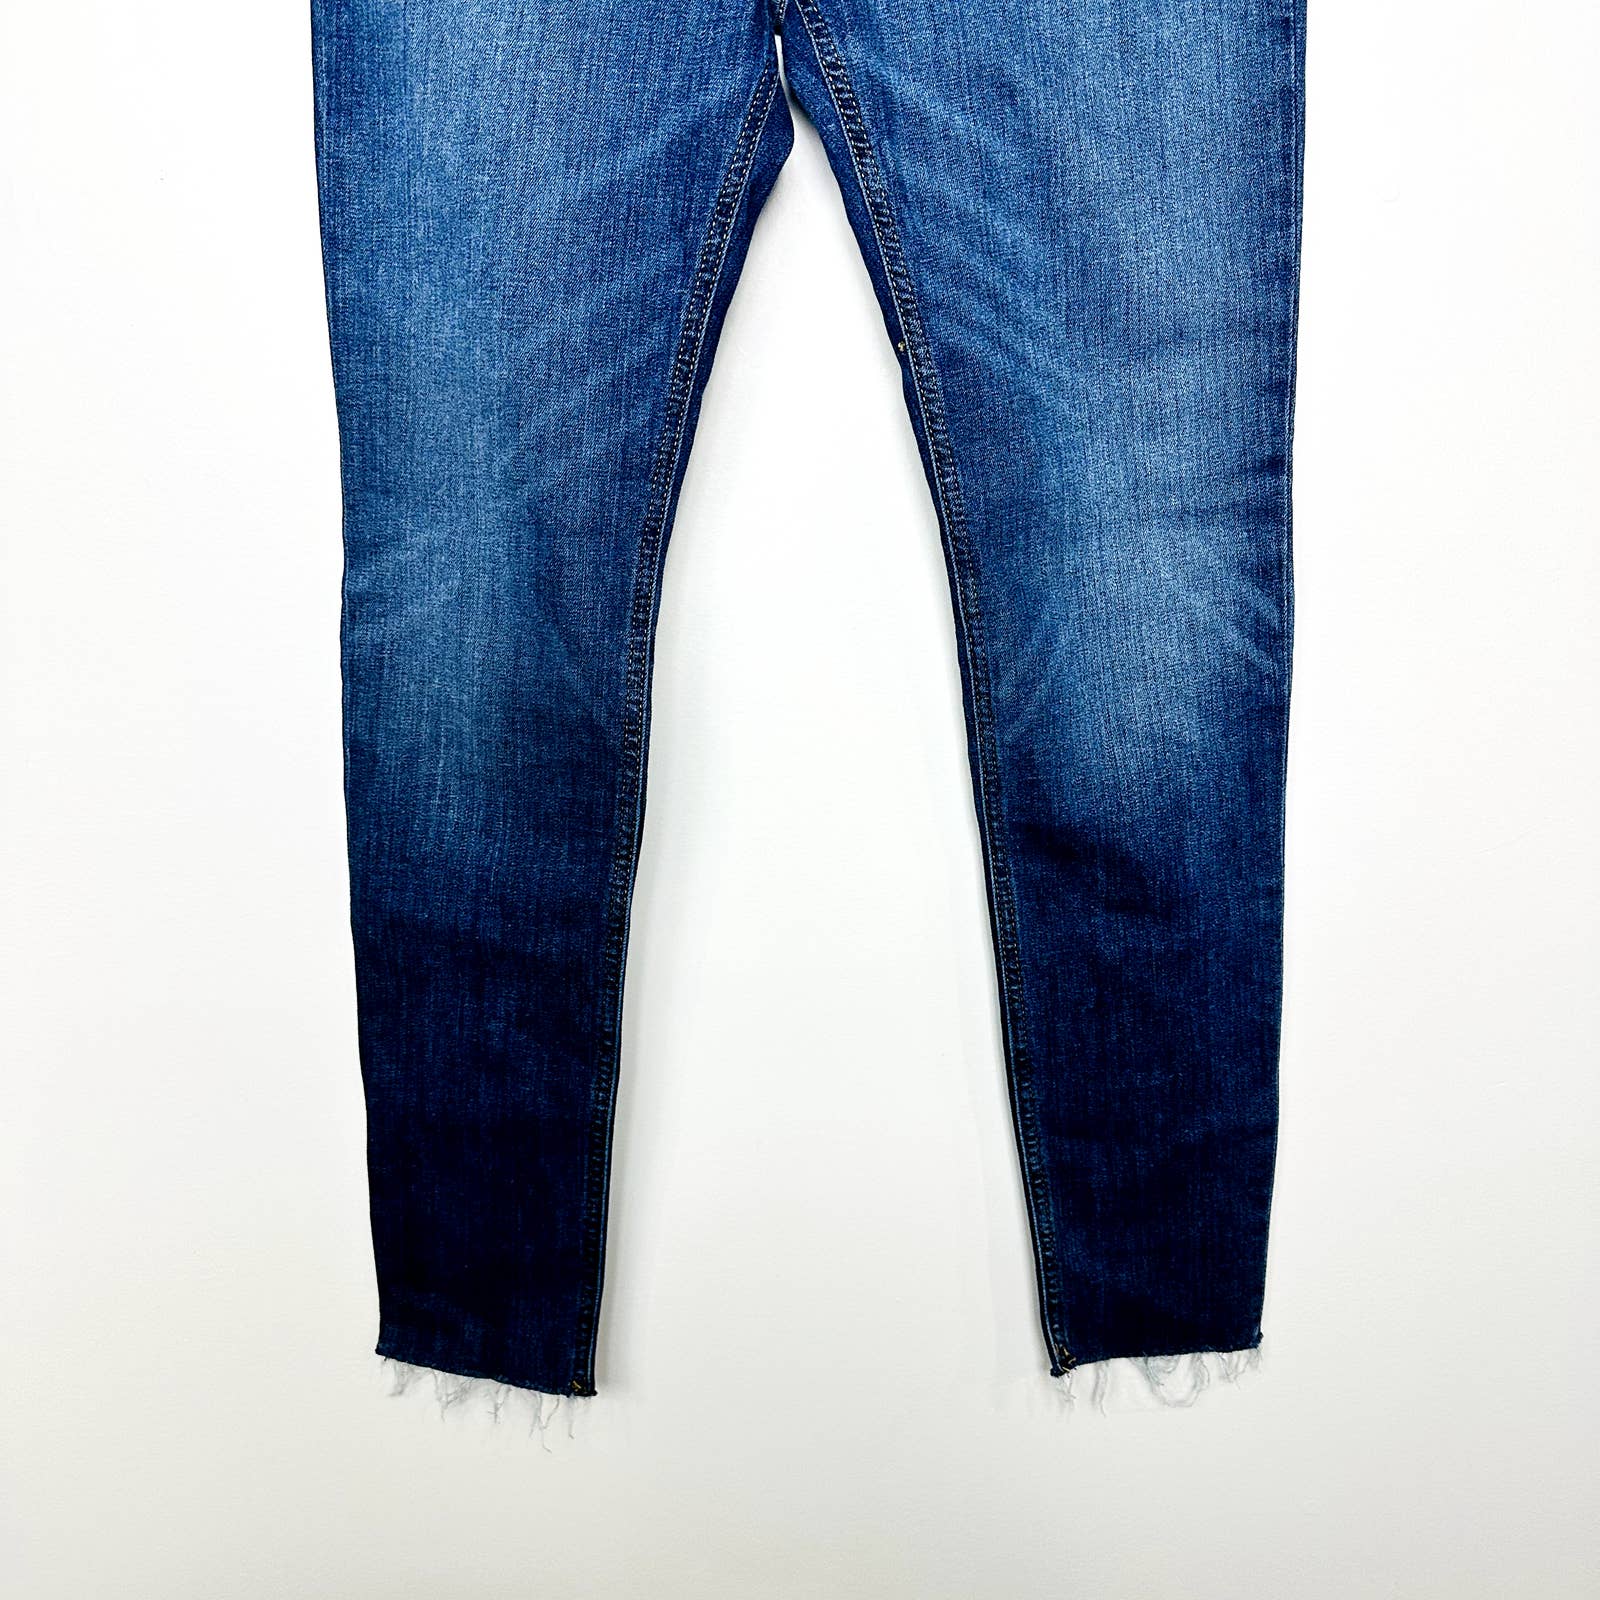 rag & bone NWT Cate Midi-Rise Classic Ankle Raw Hem Skinny Jeans Juni Size 27